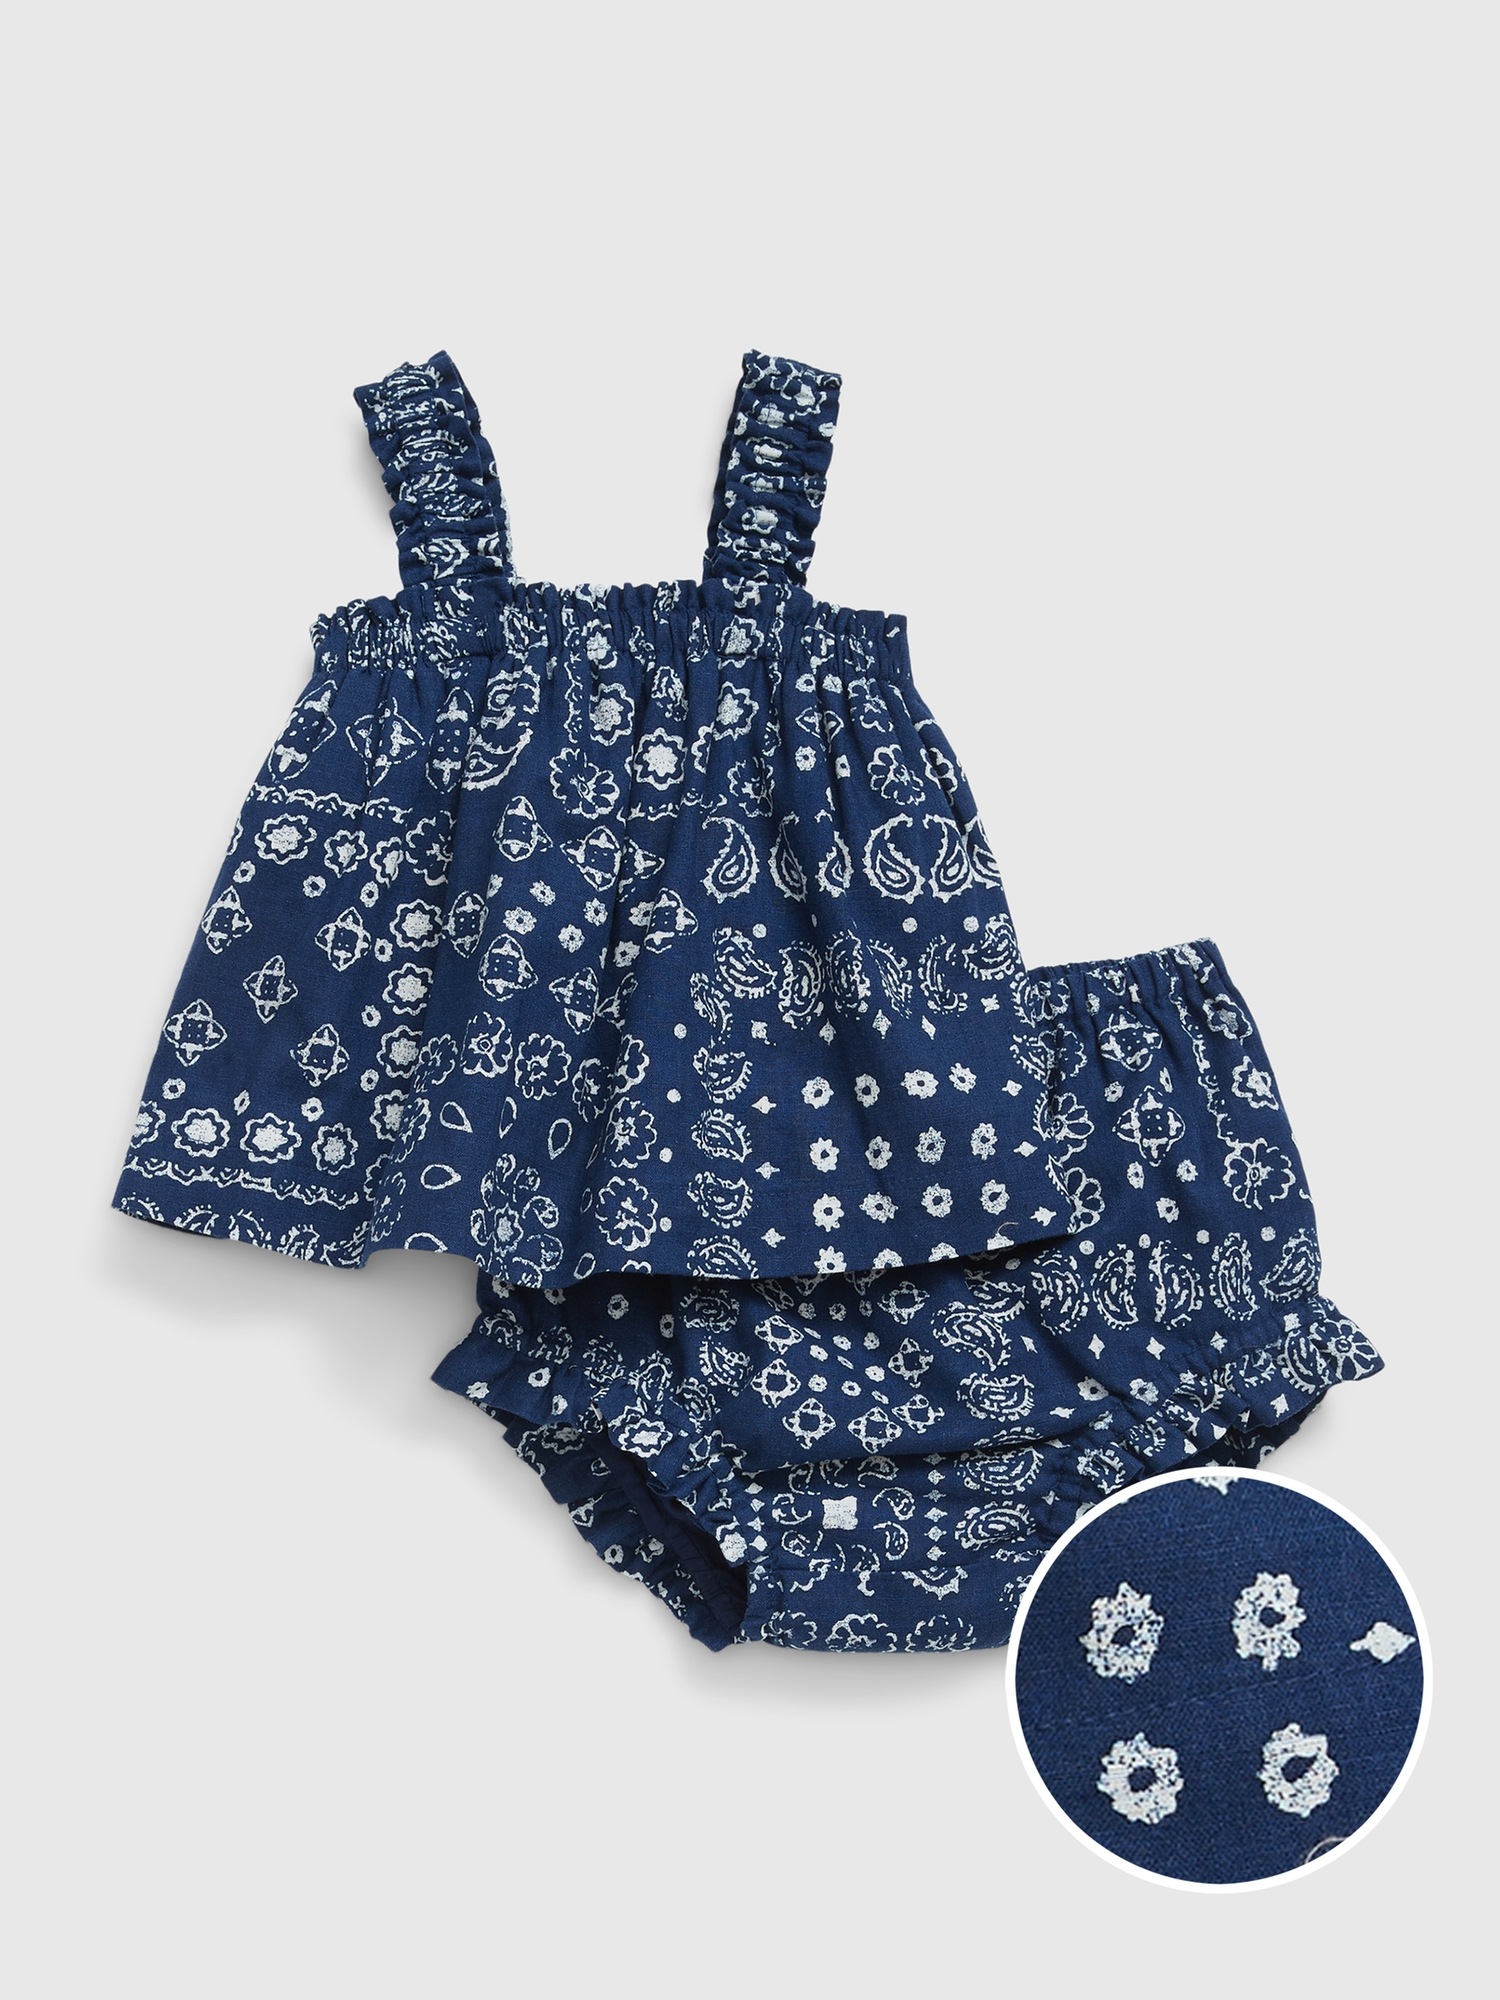 Gap Baby Linen-Cotton Two-Piece Outfit Set blue. 1